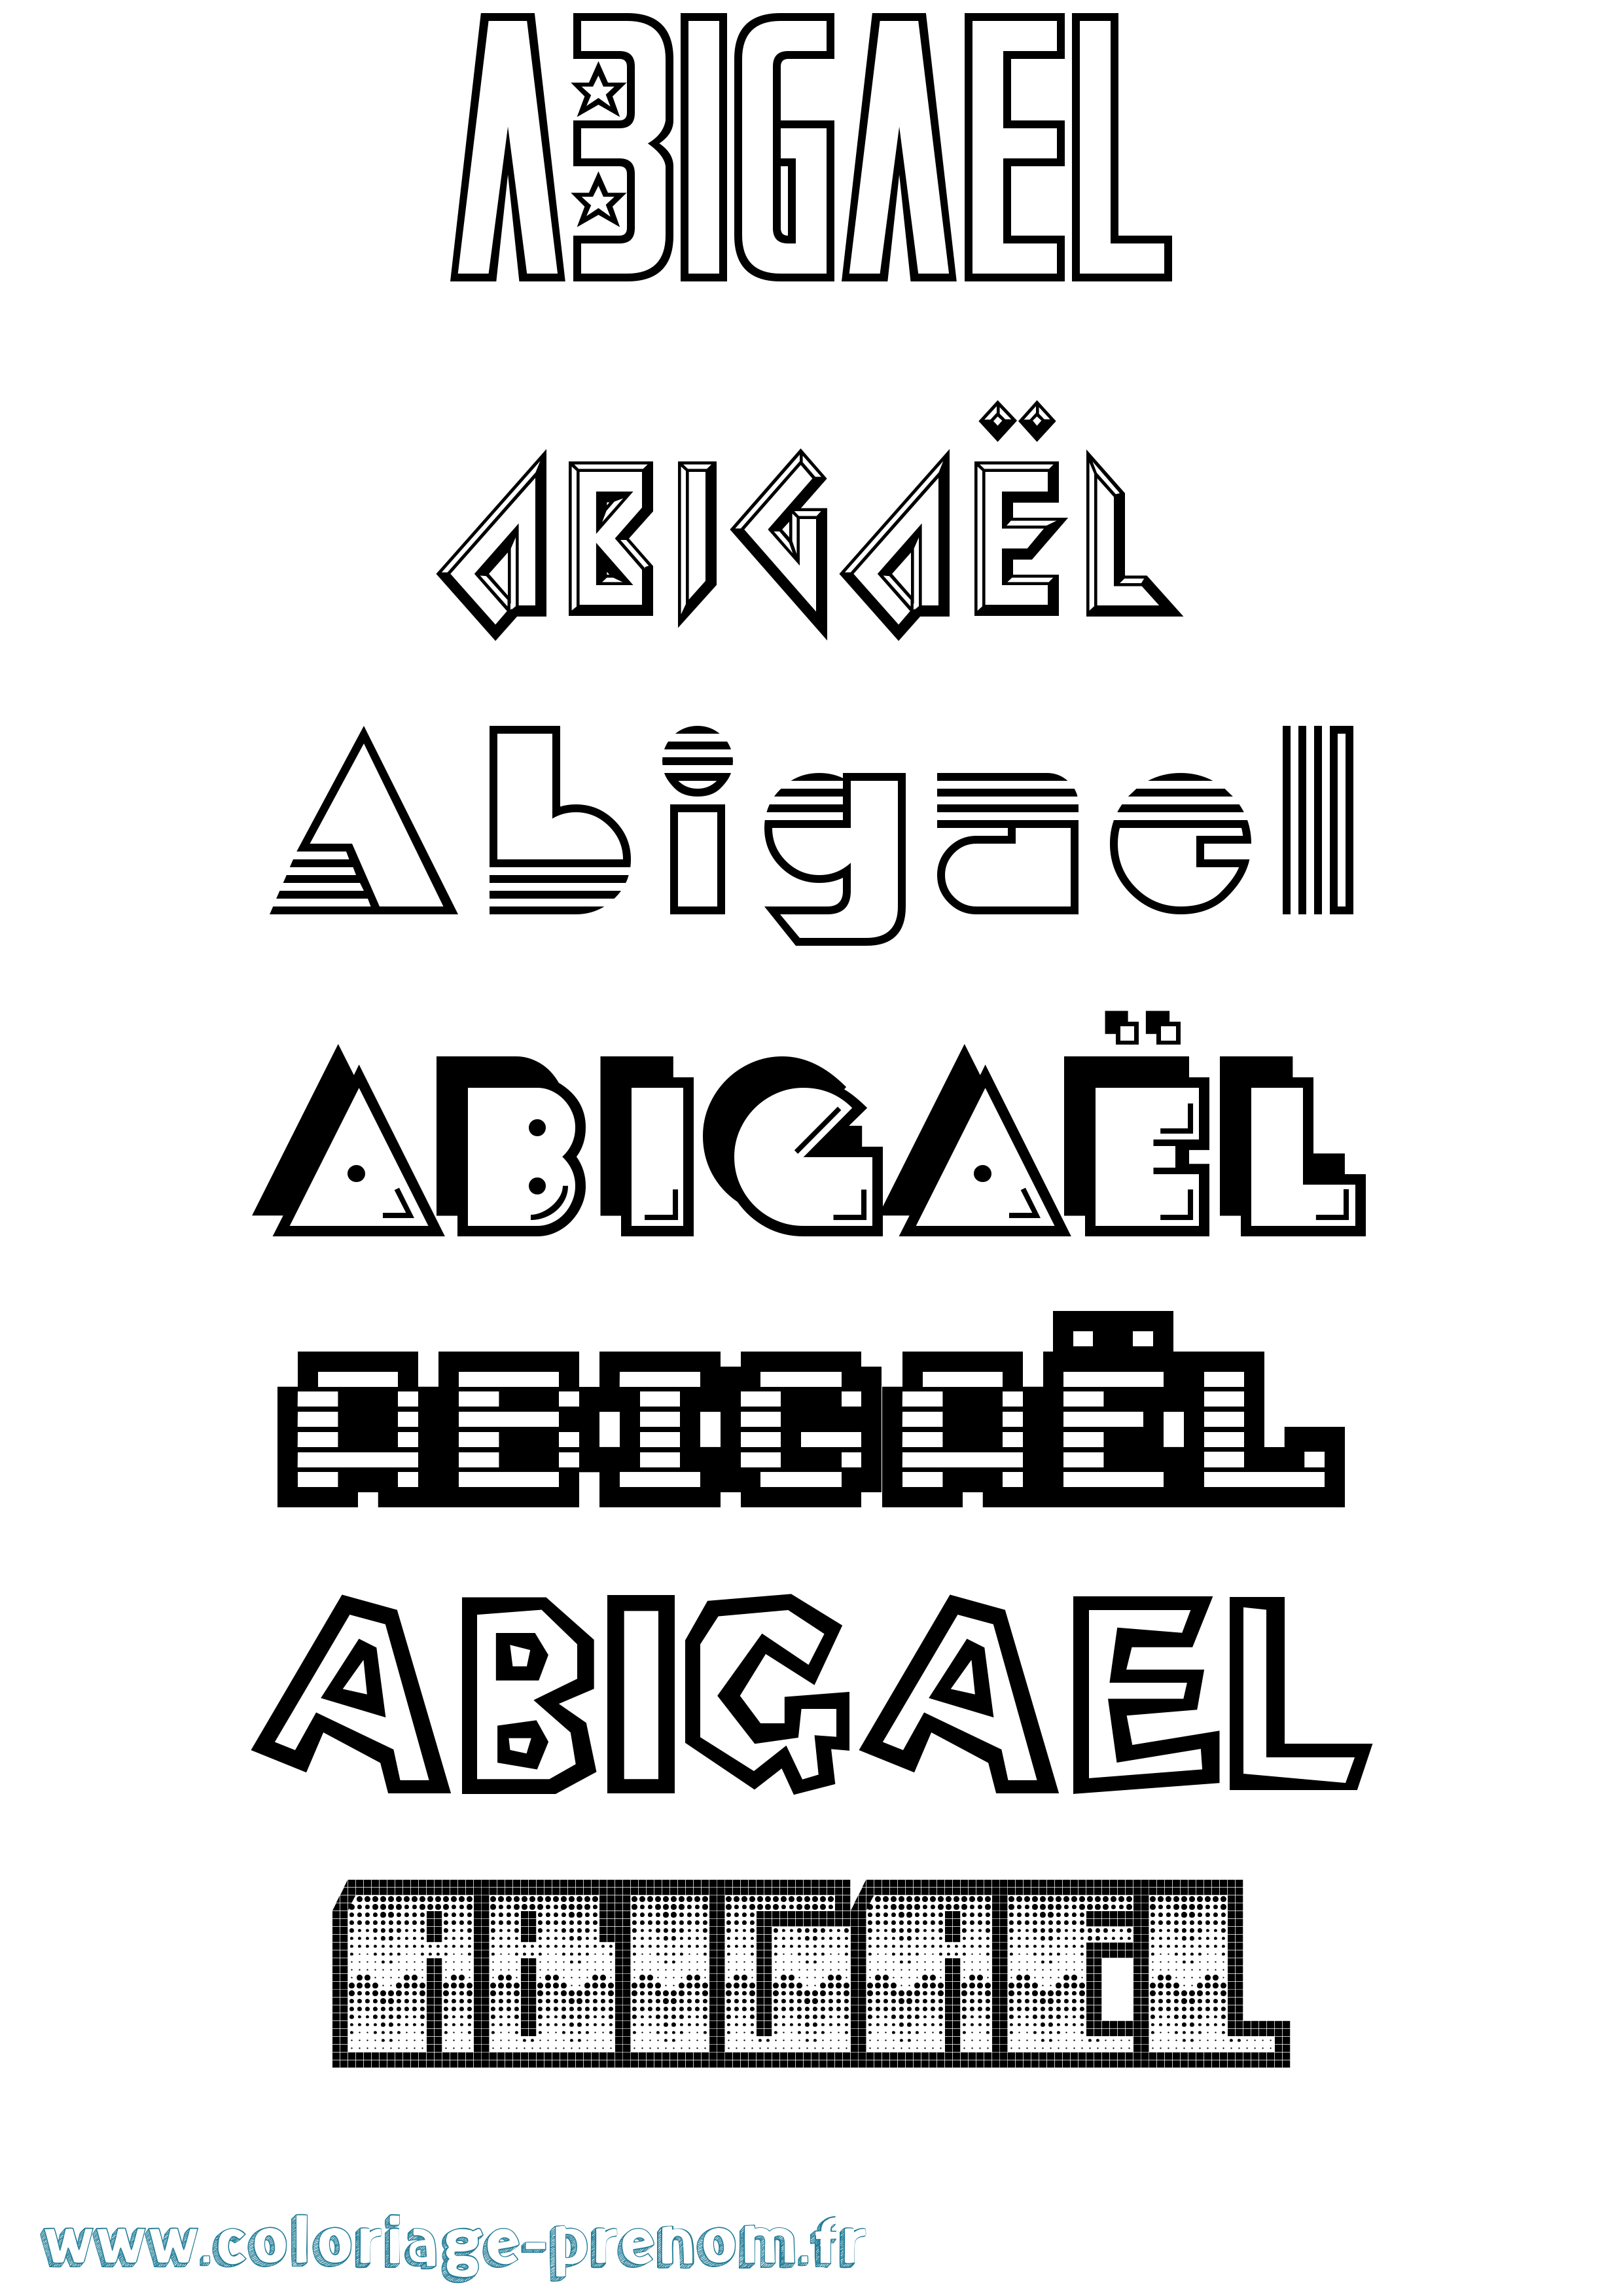 Coloriage prénom Abigaël